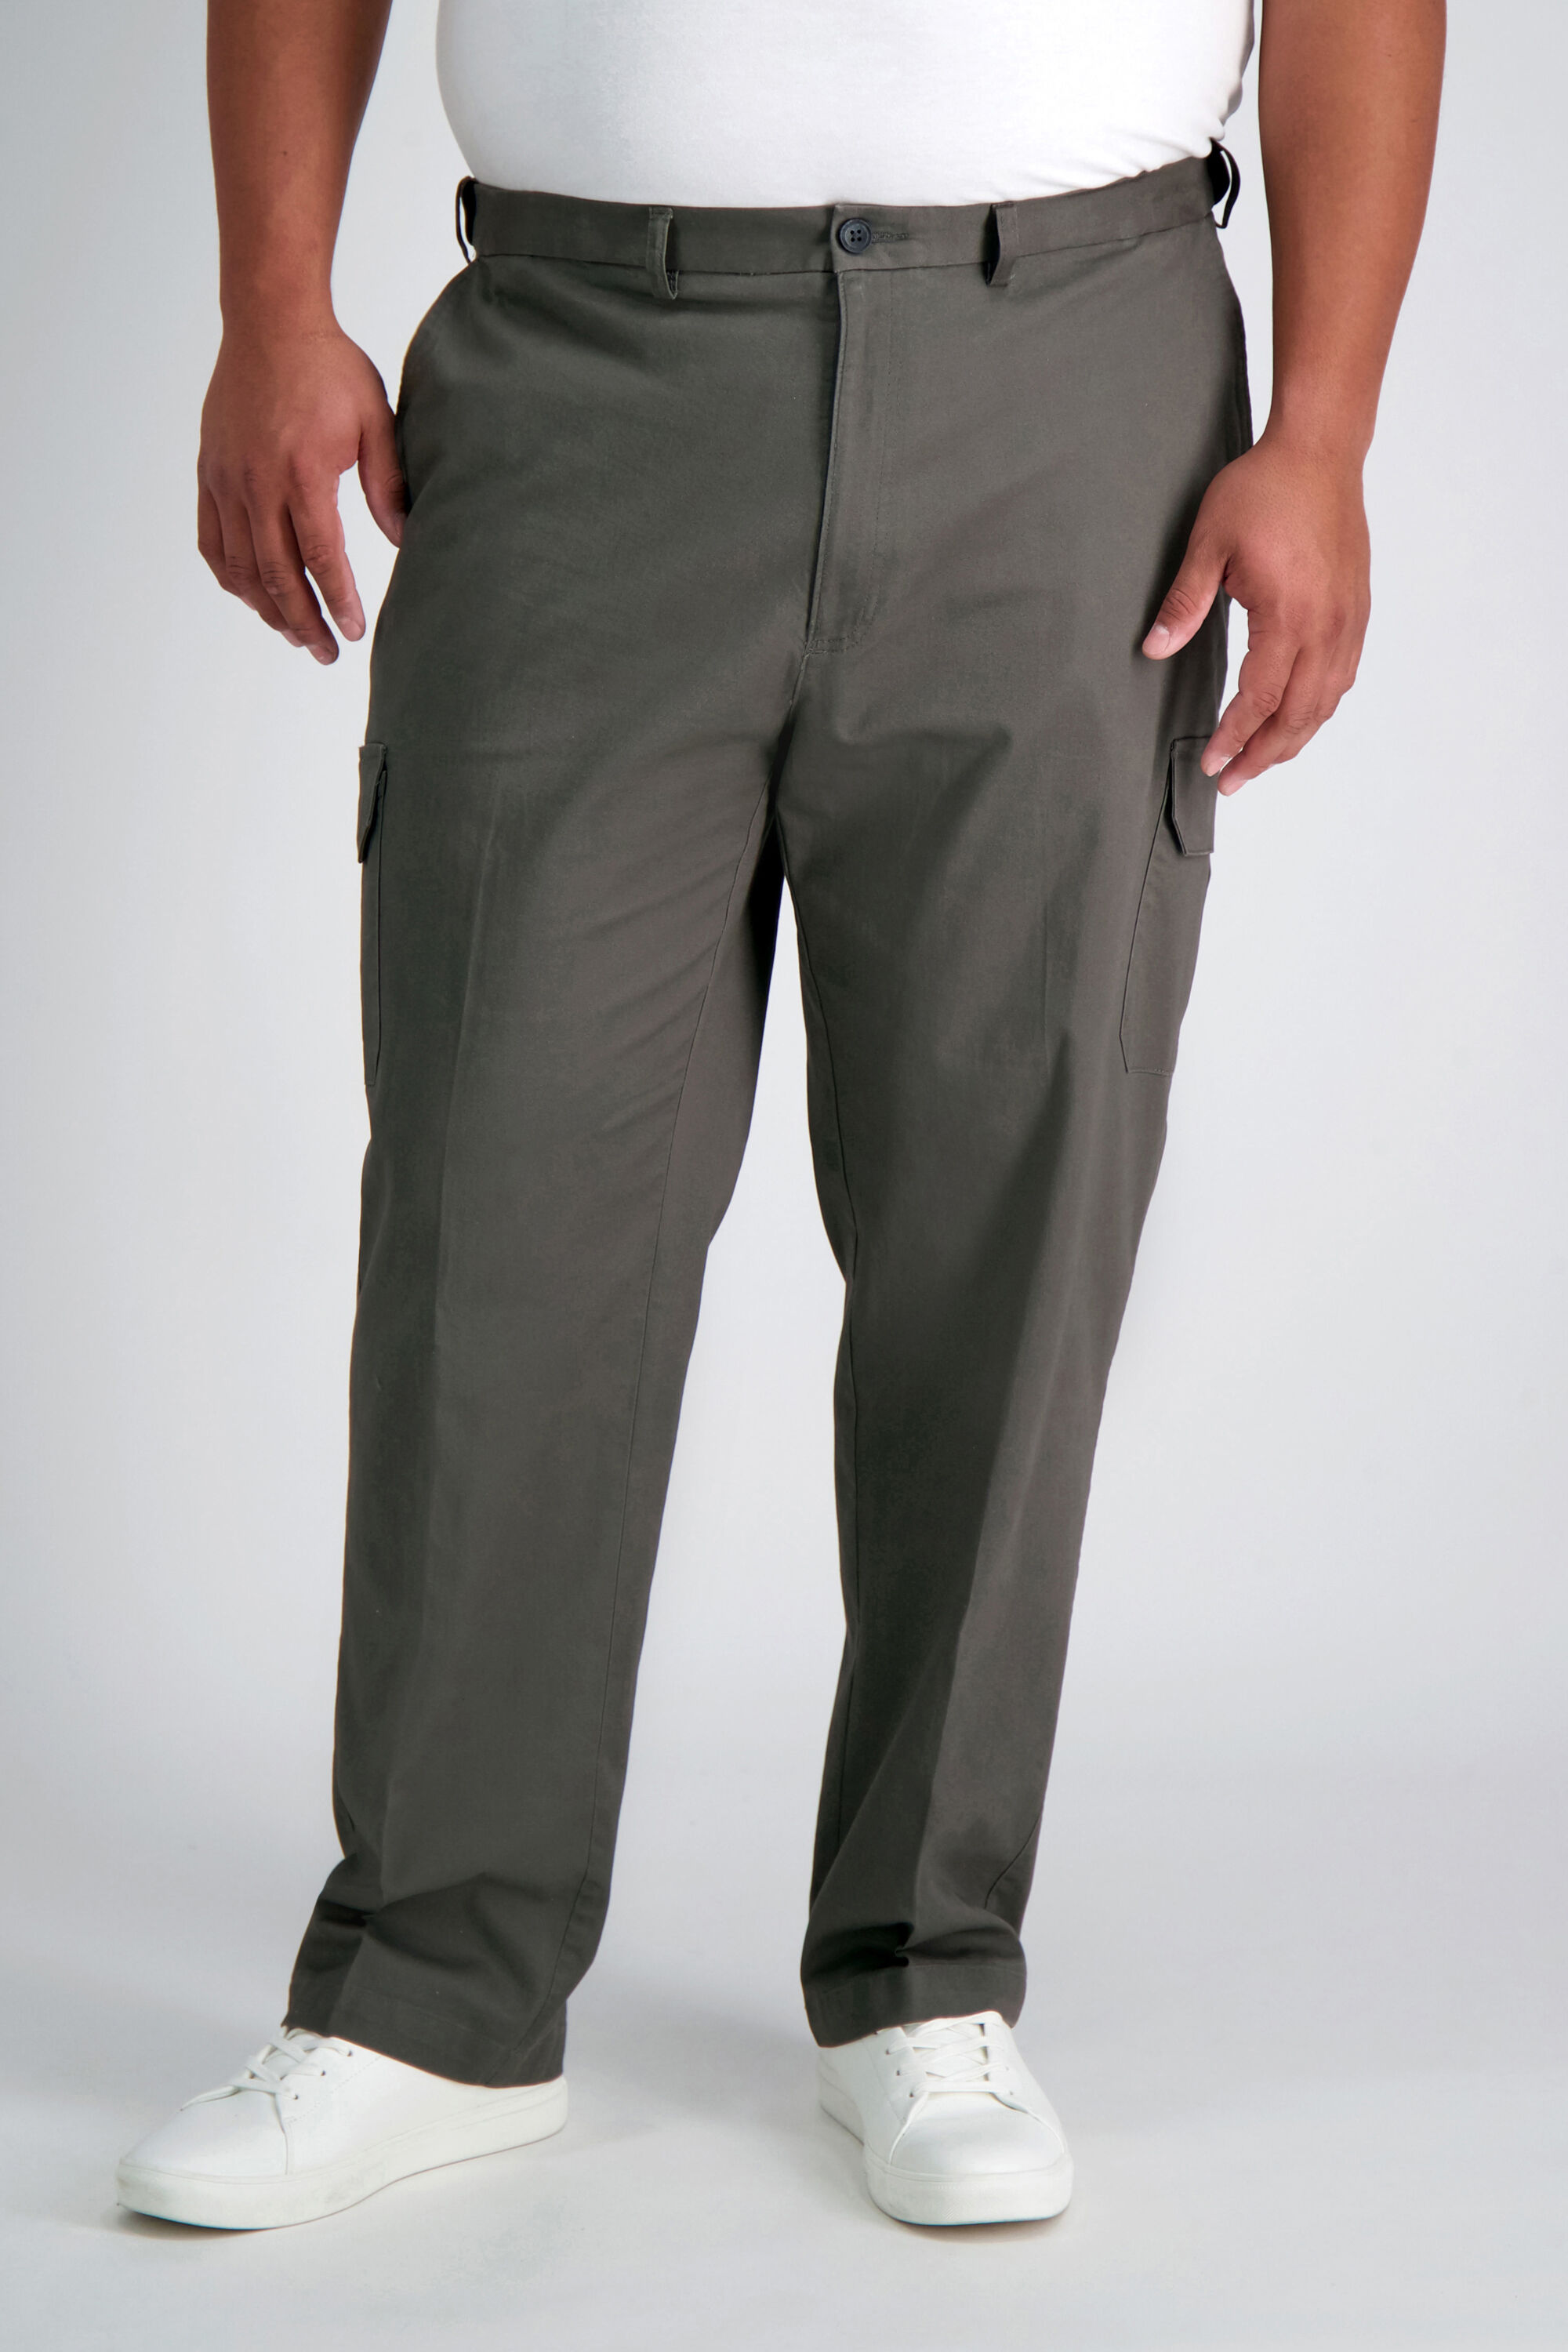 ELANHOOD Grey And Cream Formal Trouser For Men